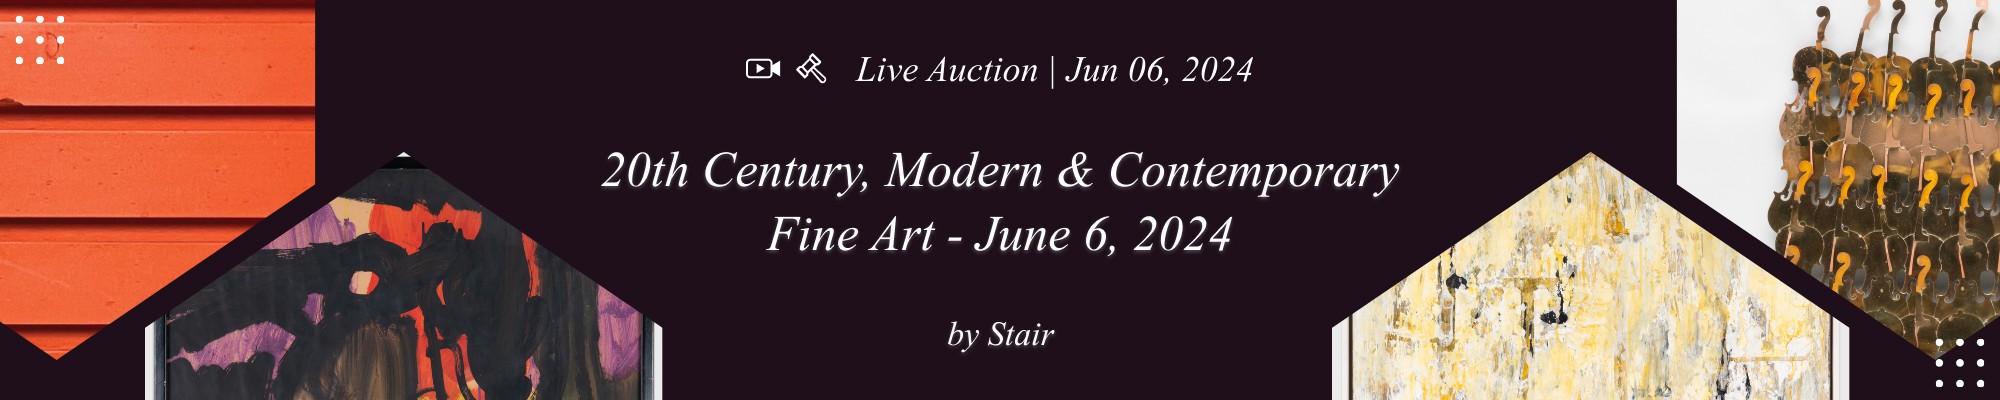 20th Century, Modern & Contemporary Fine Art - June 6, 2024